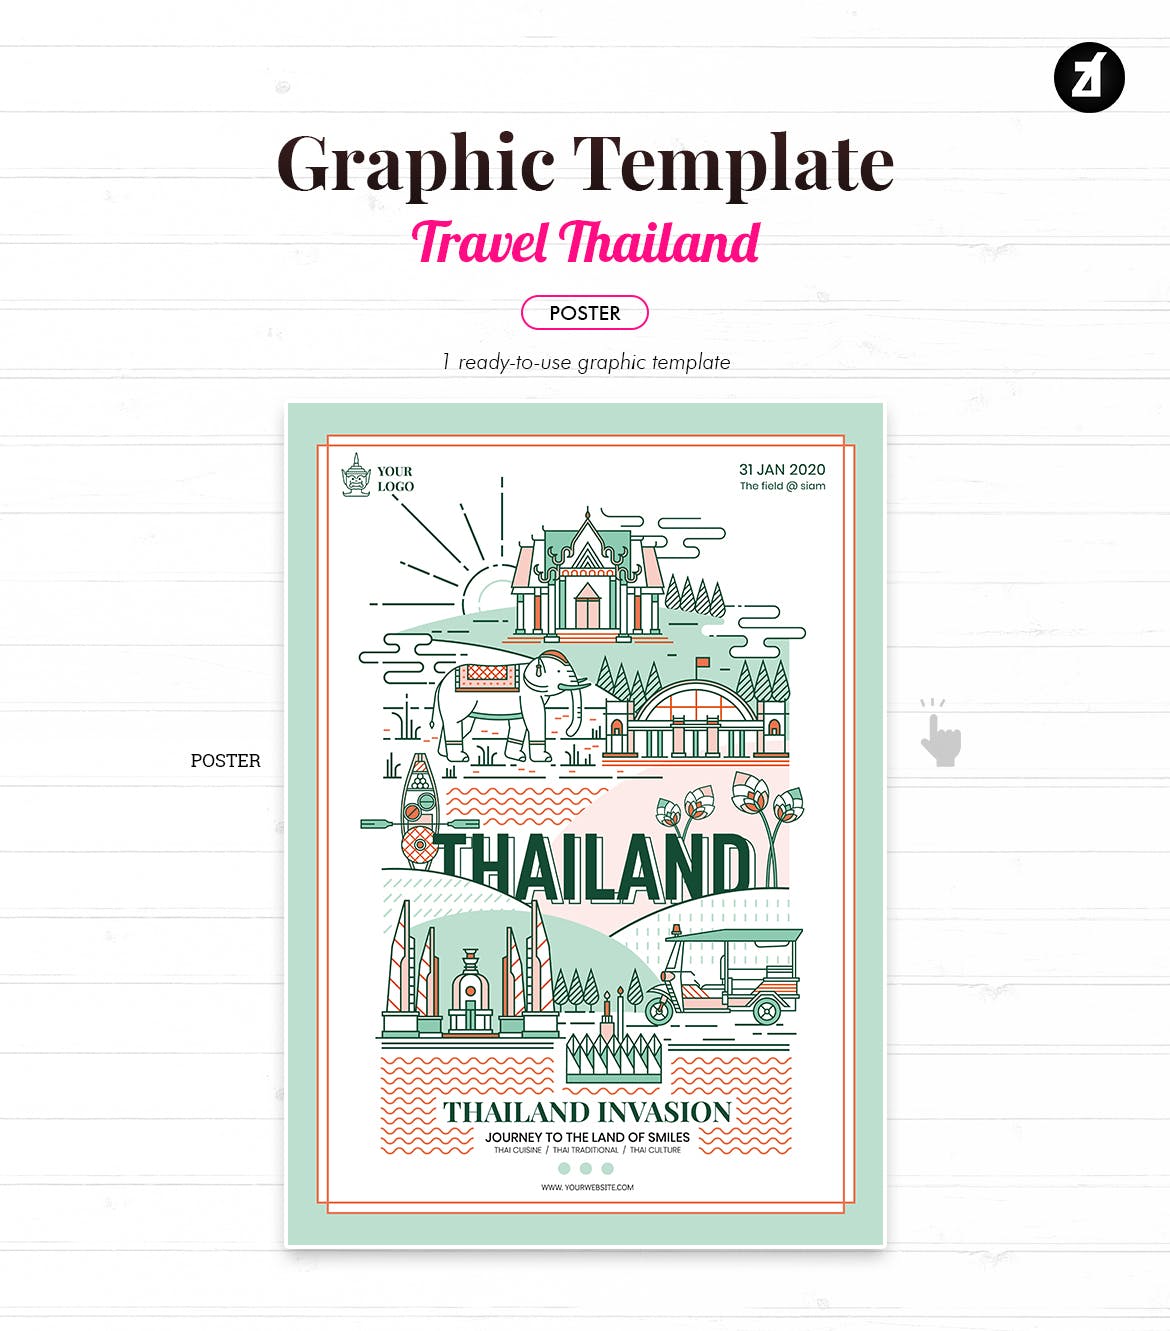 40款泰国地标/元素矢量图标素材 40 Thailand elements with bonus graphic template插图(2)